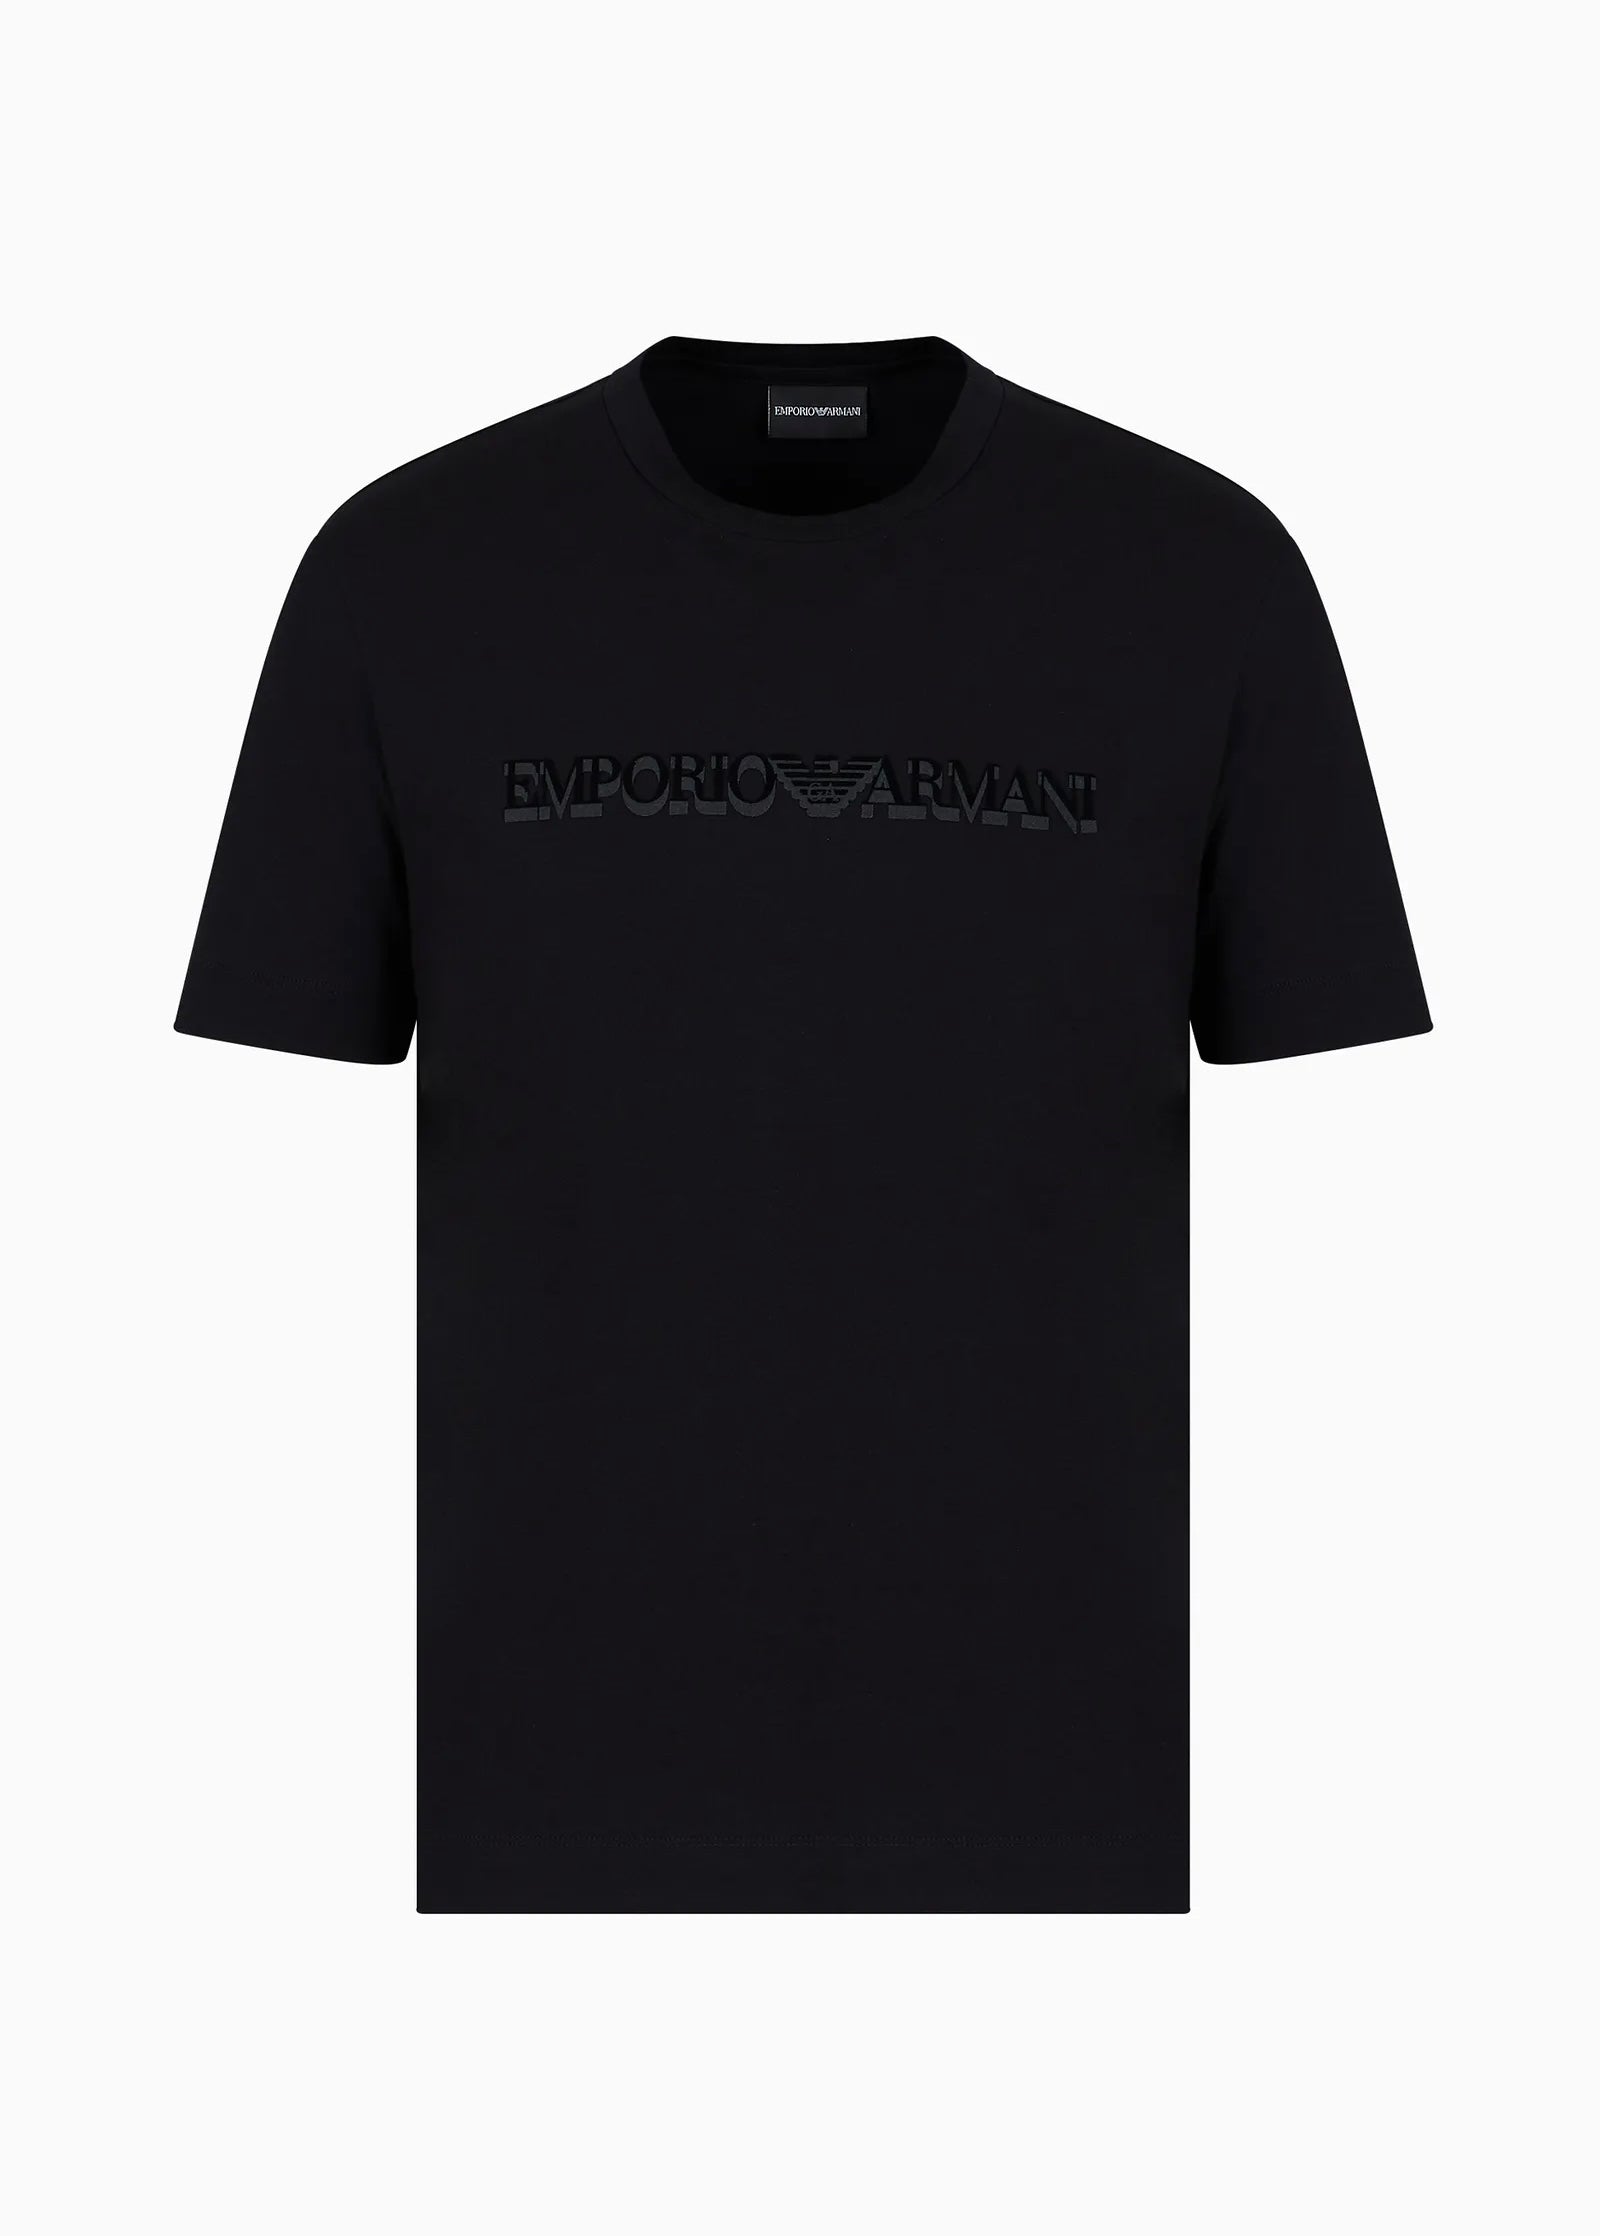 Emporio Armani Logo Black T-shirt